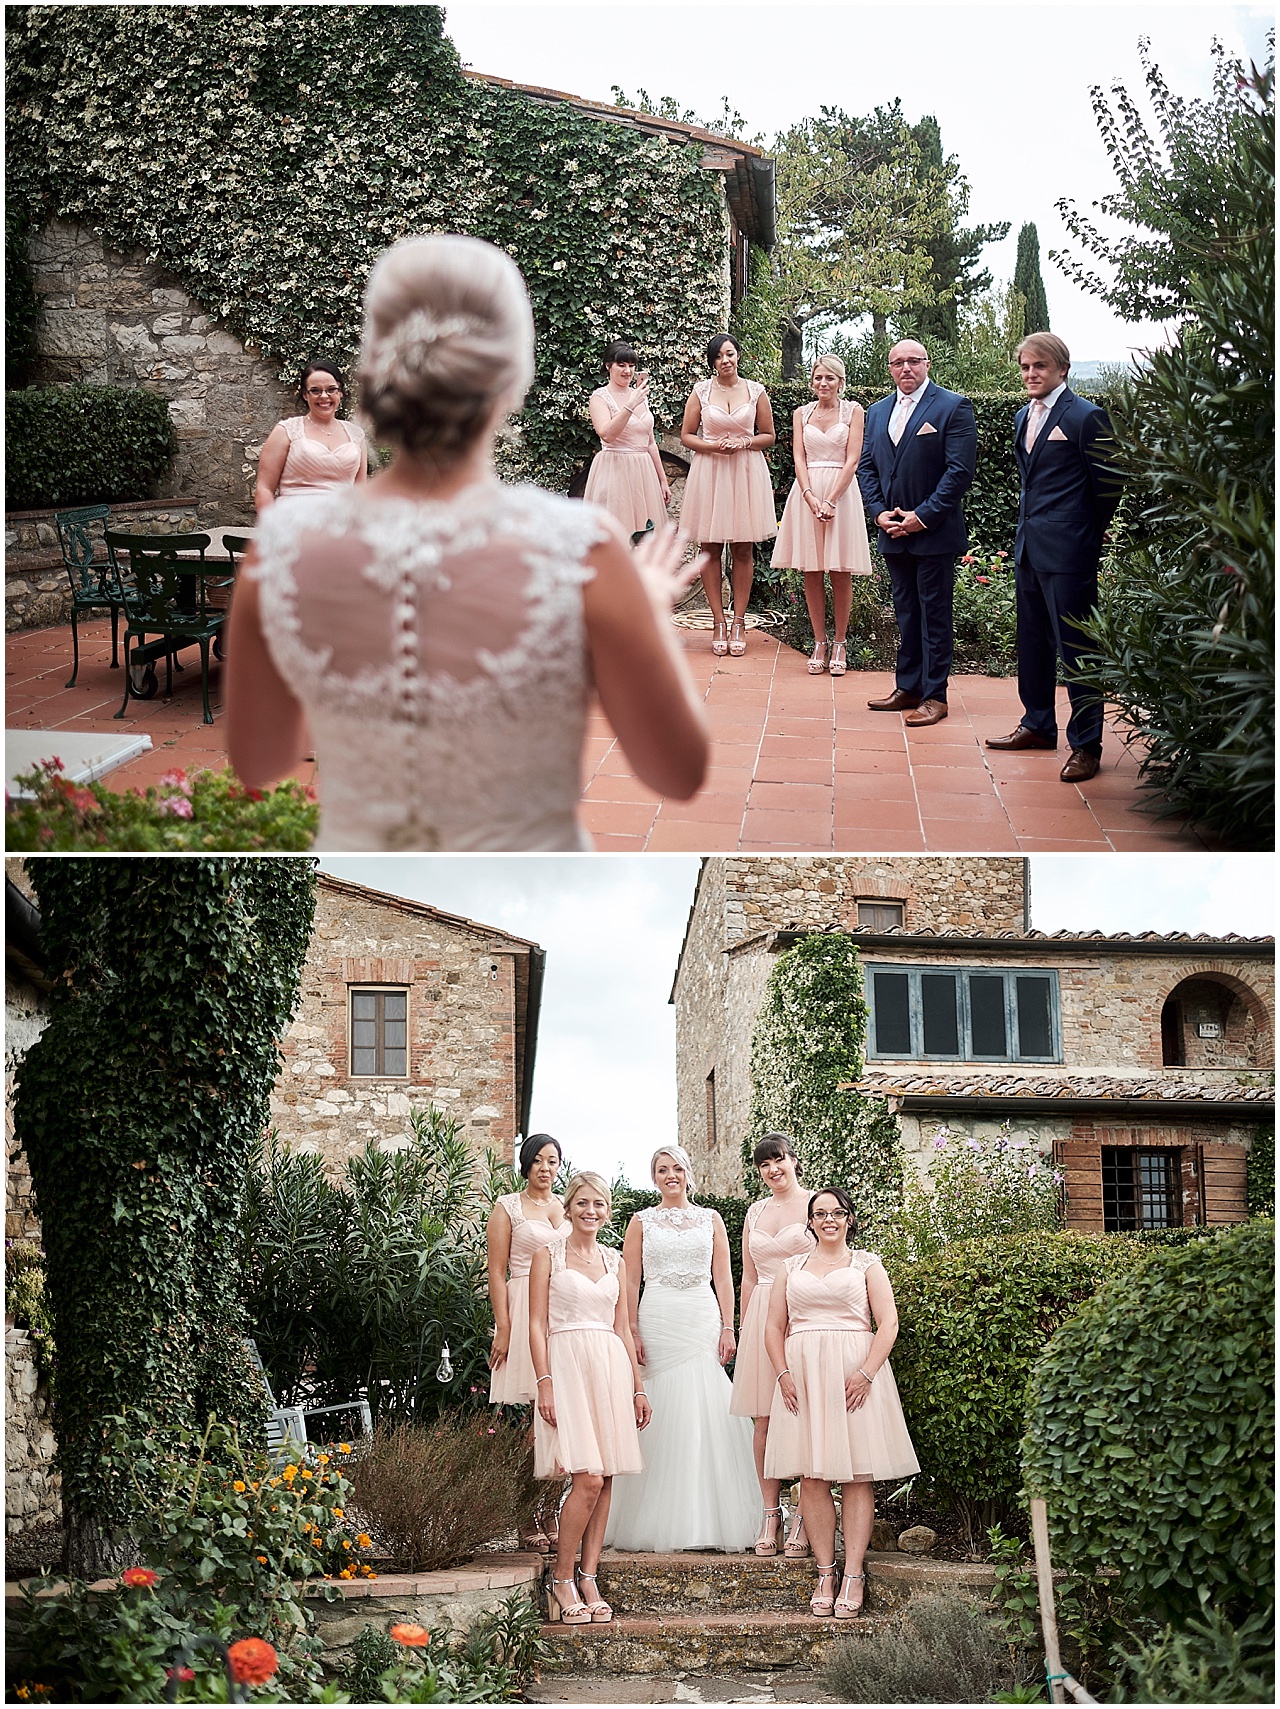  destination wedding siena tuscany florence chianti photographer bride groom town hall chianti country 